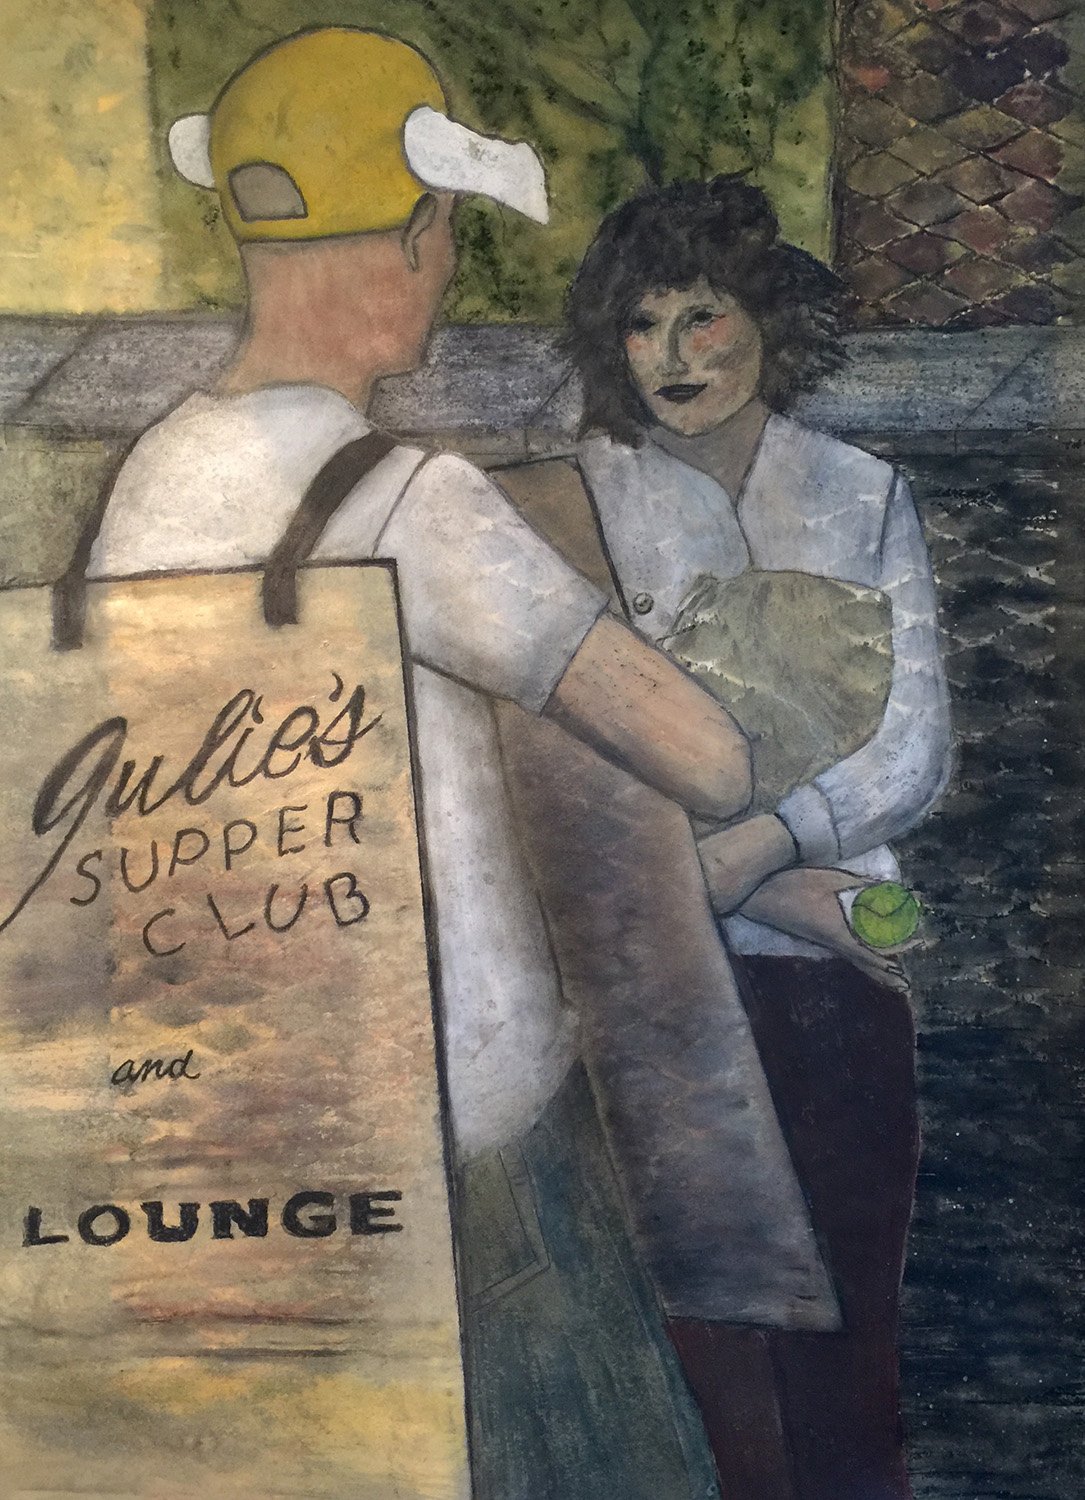 "Julie's Supper Club"